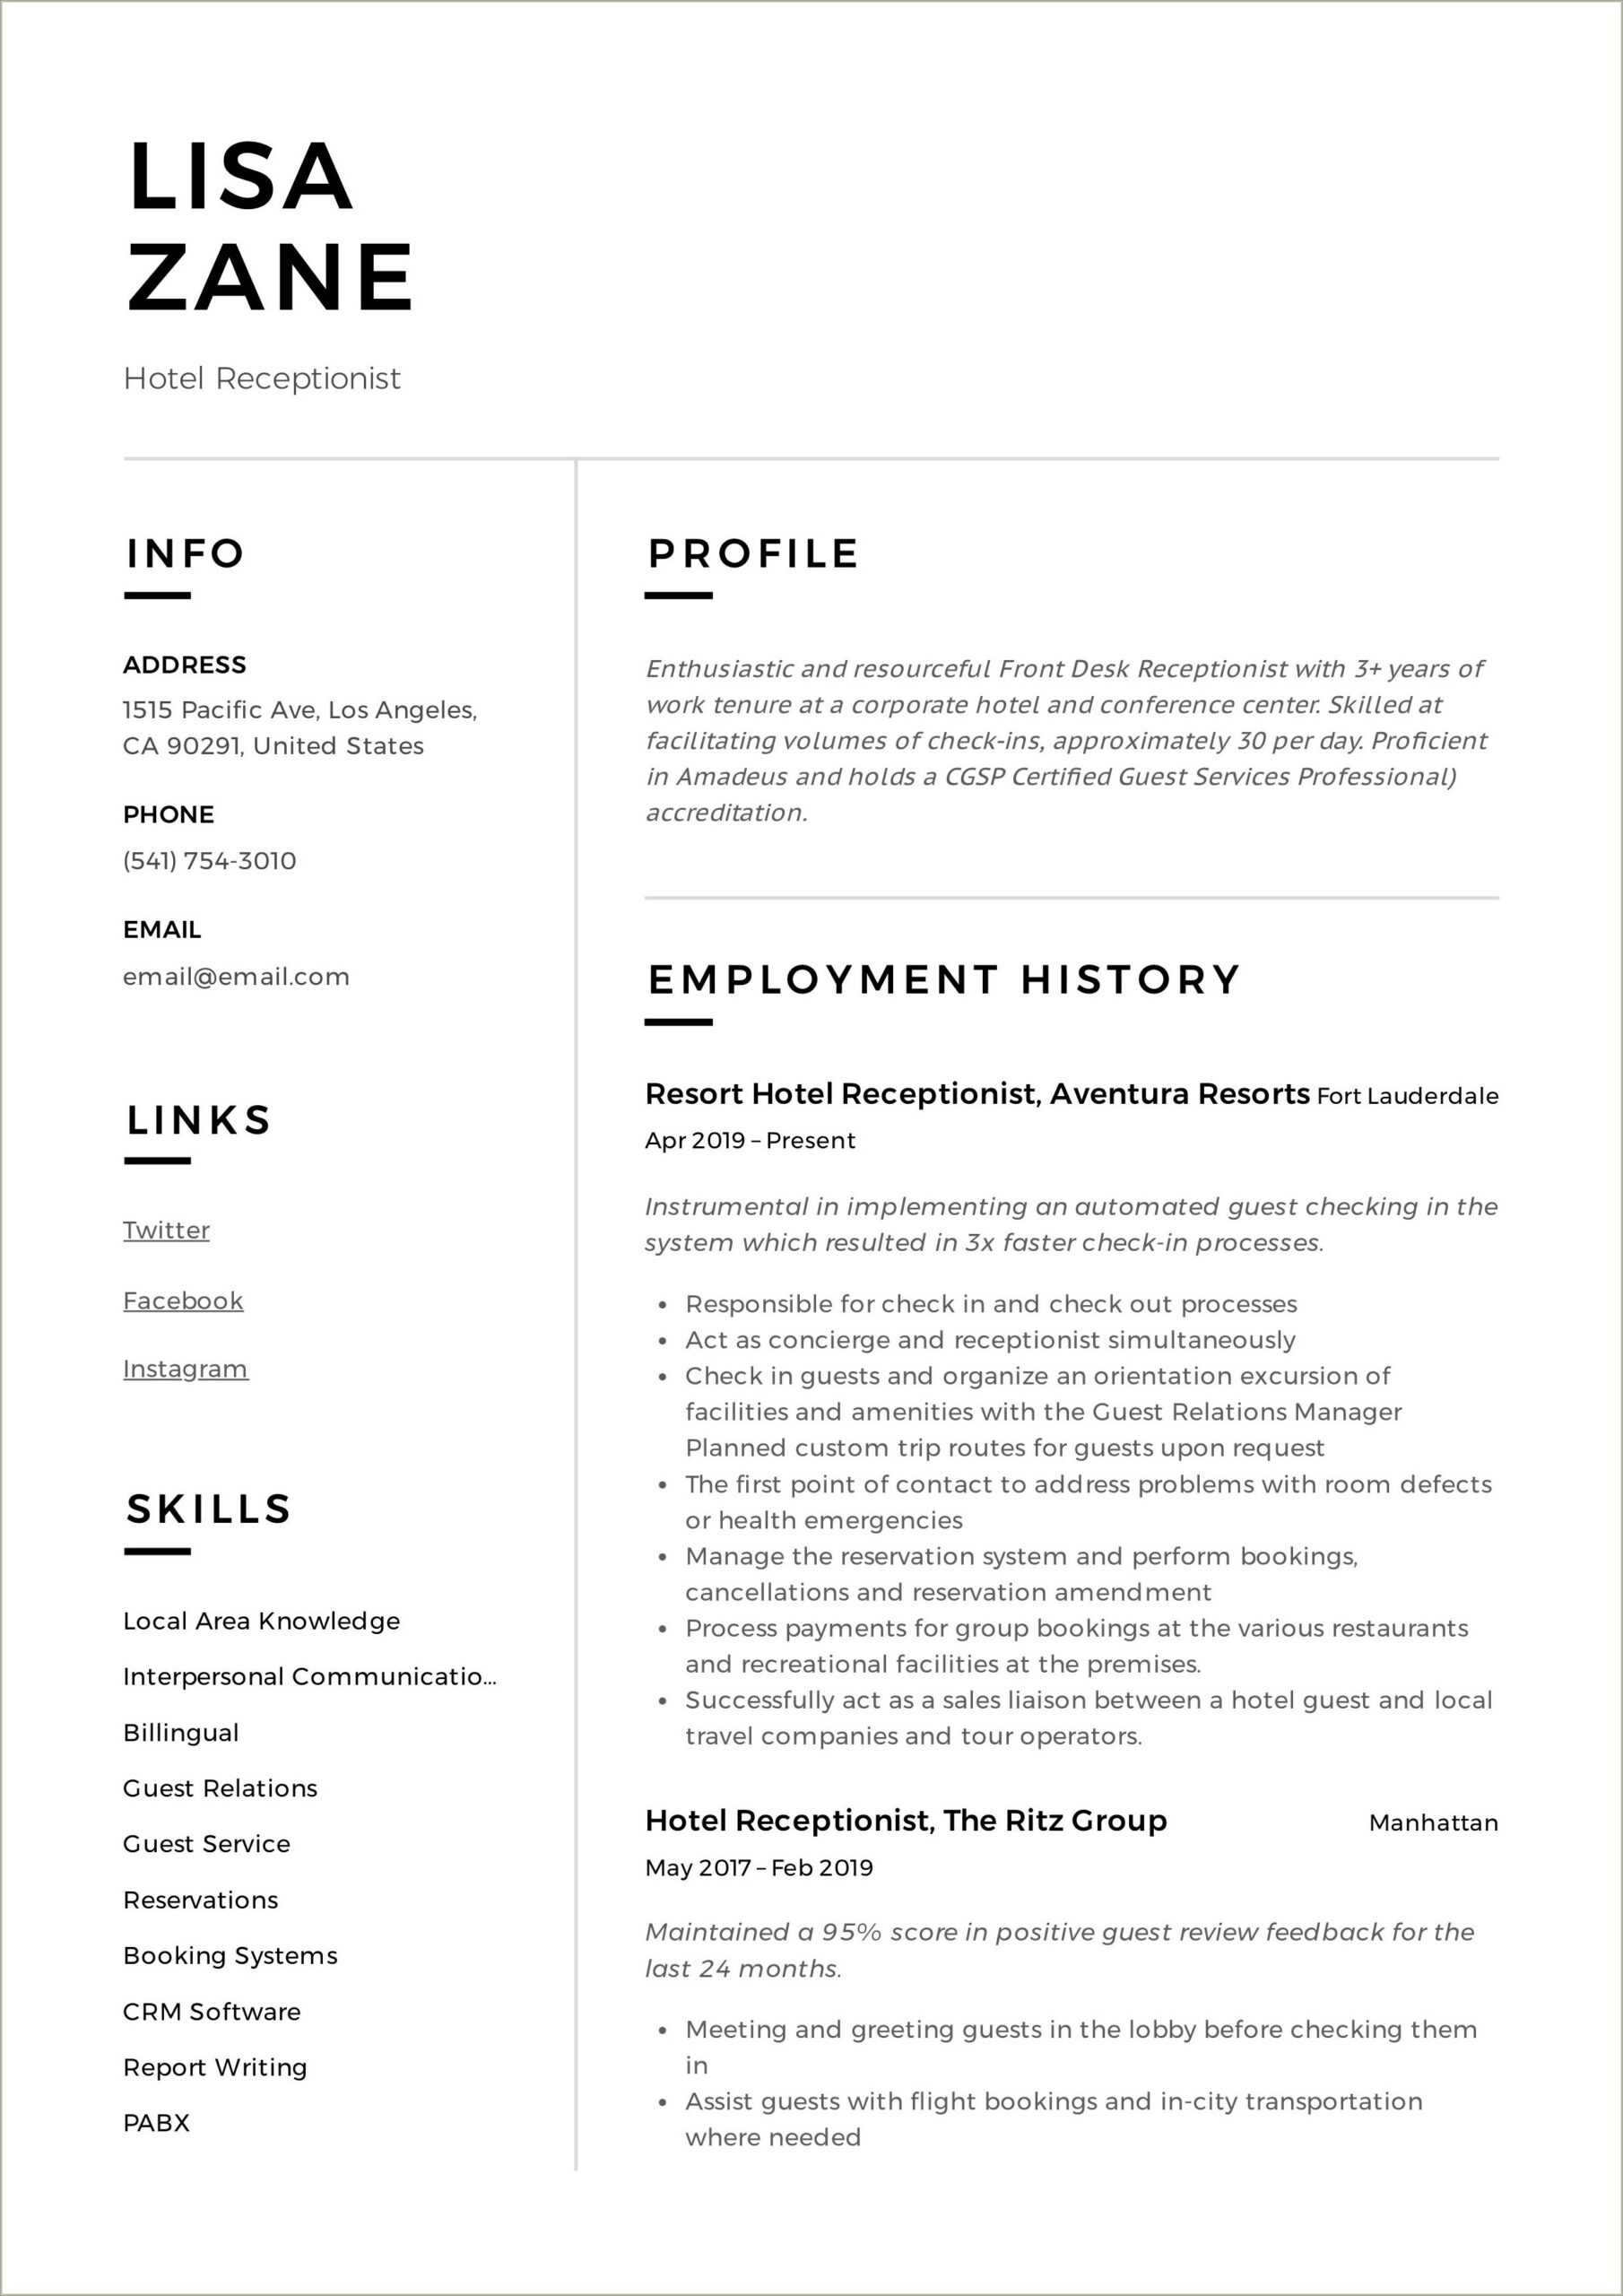 Hotel Assistant Manager Job Description Resume